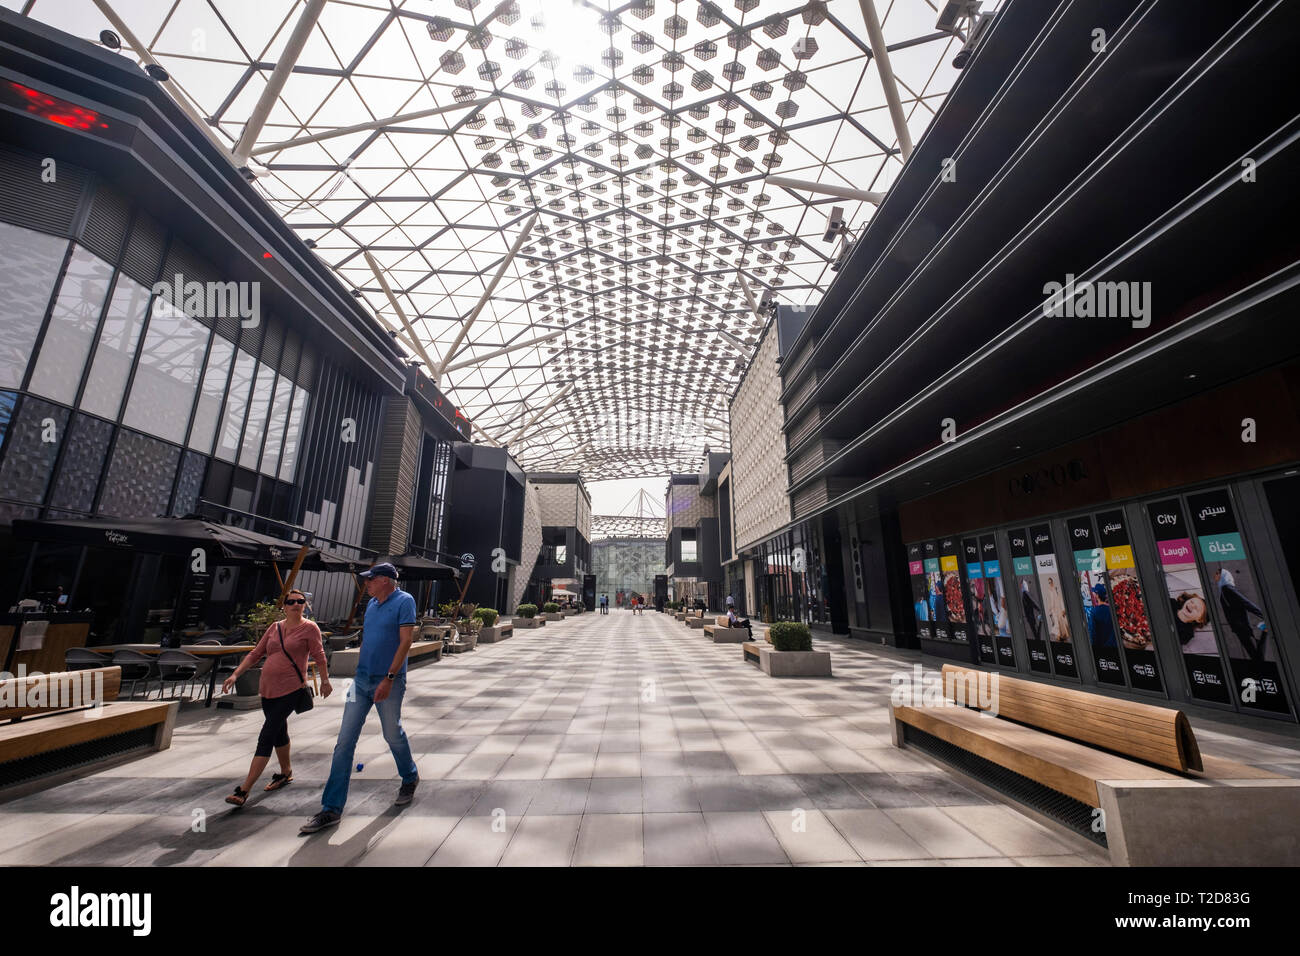 City Walk outdoor retail complex by Meraas, Dubai, United Arab Emirates Stock Photo